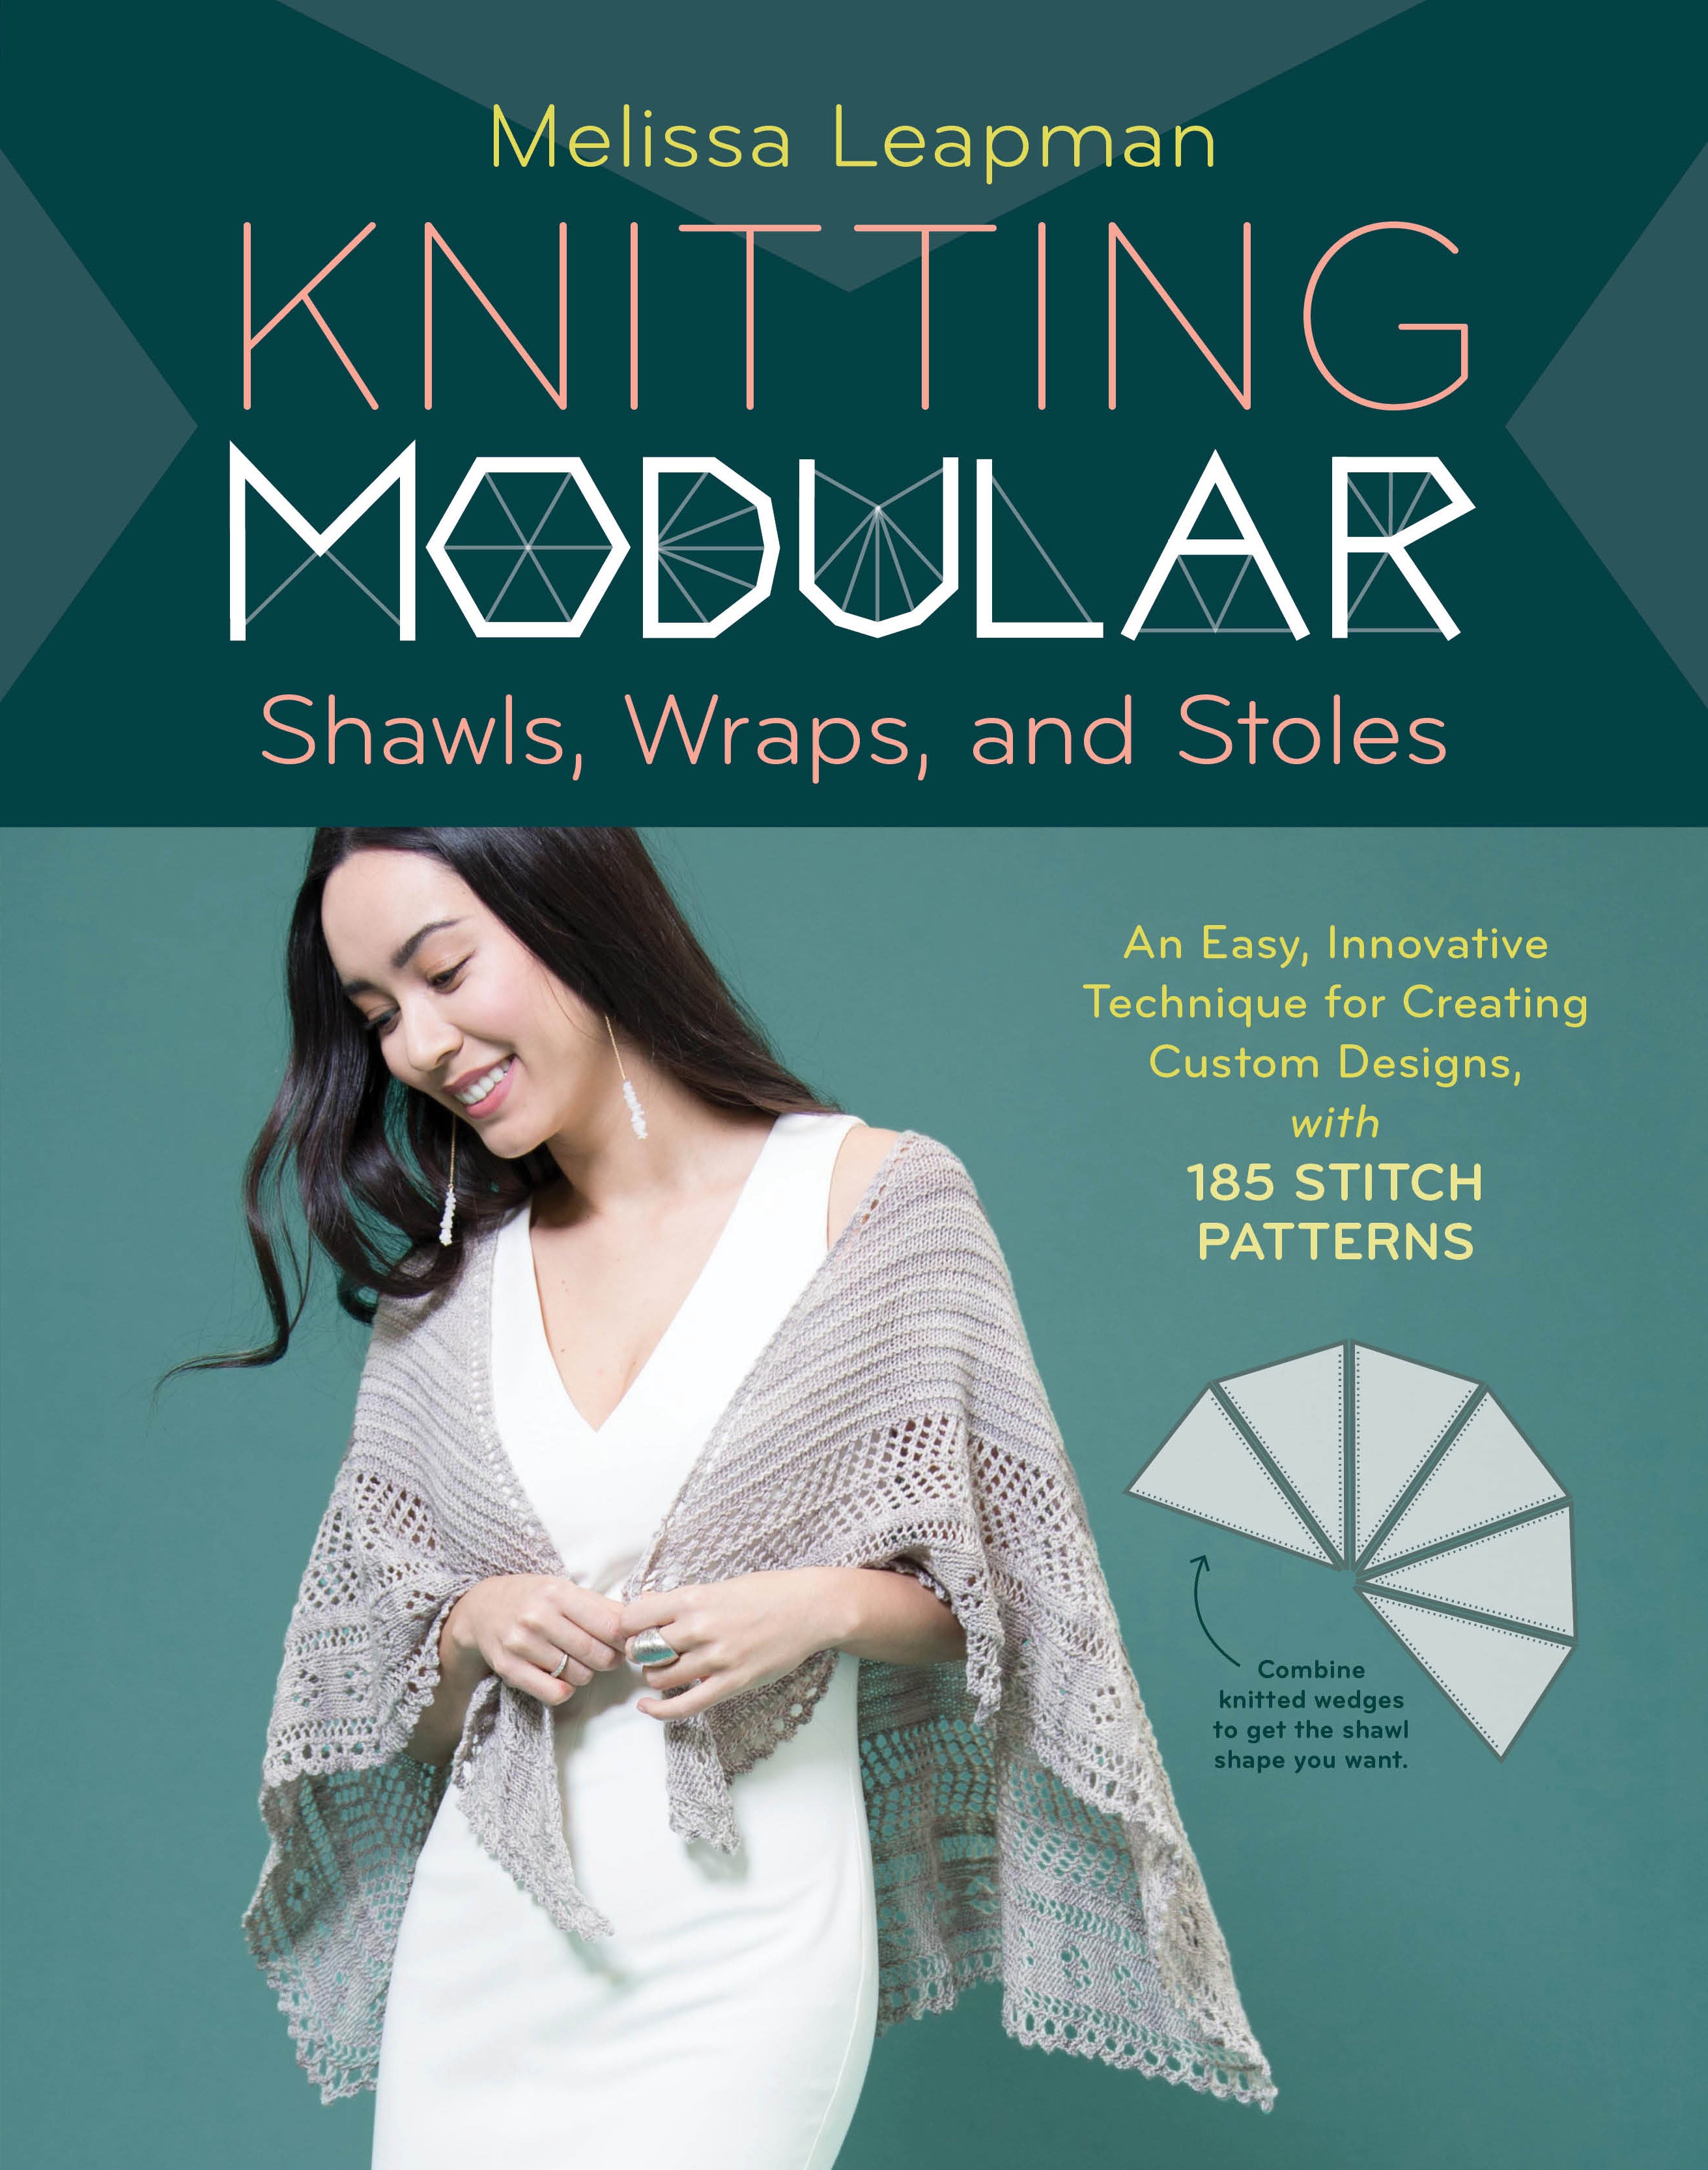 Knitting Modular by Melissa Leapman